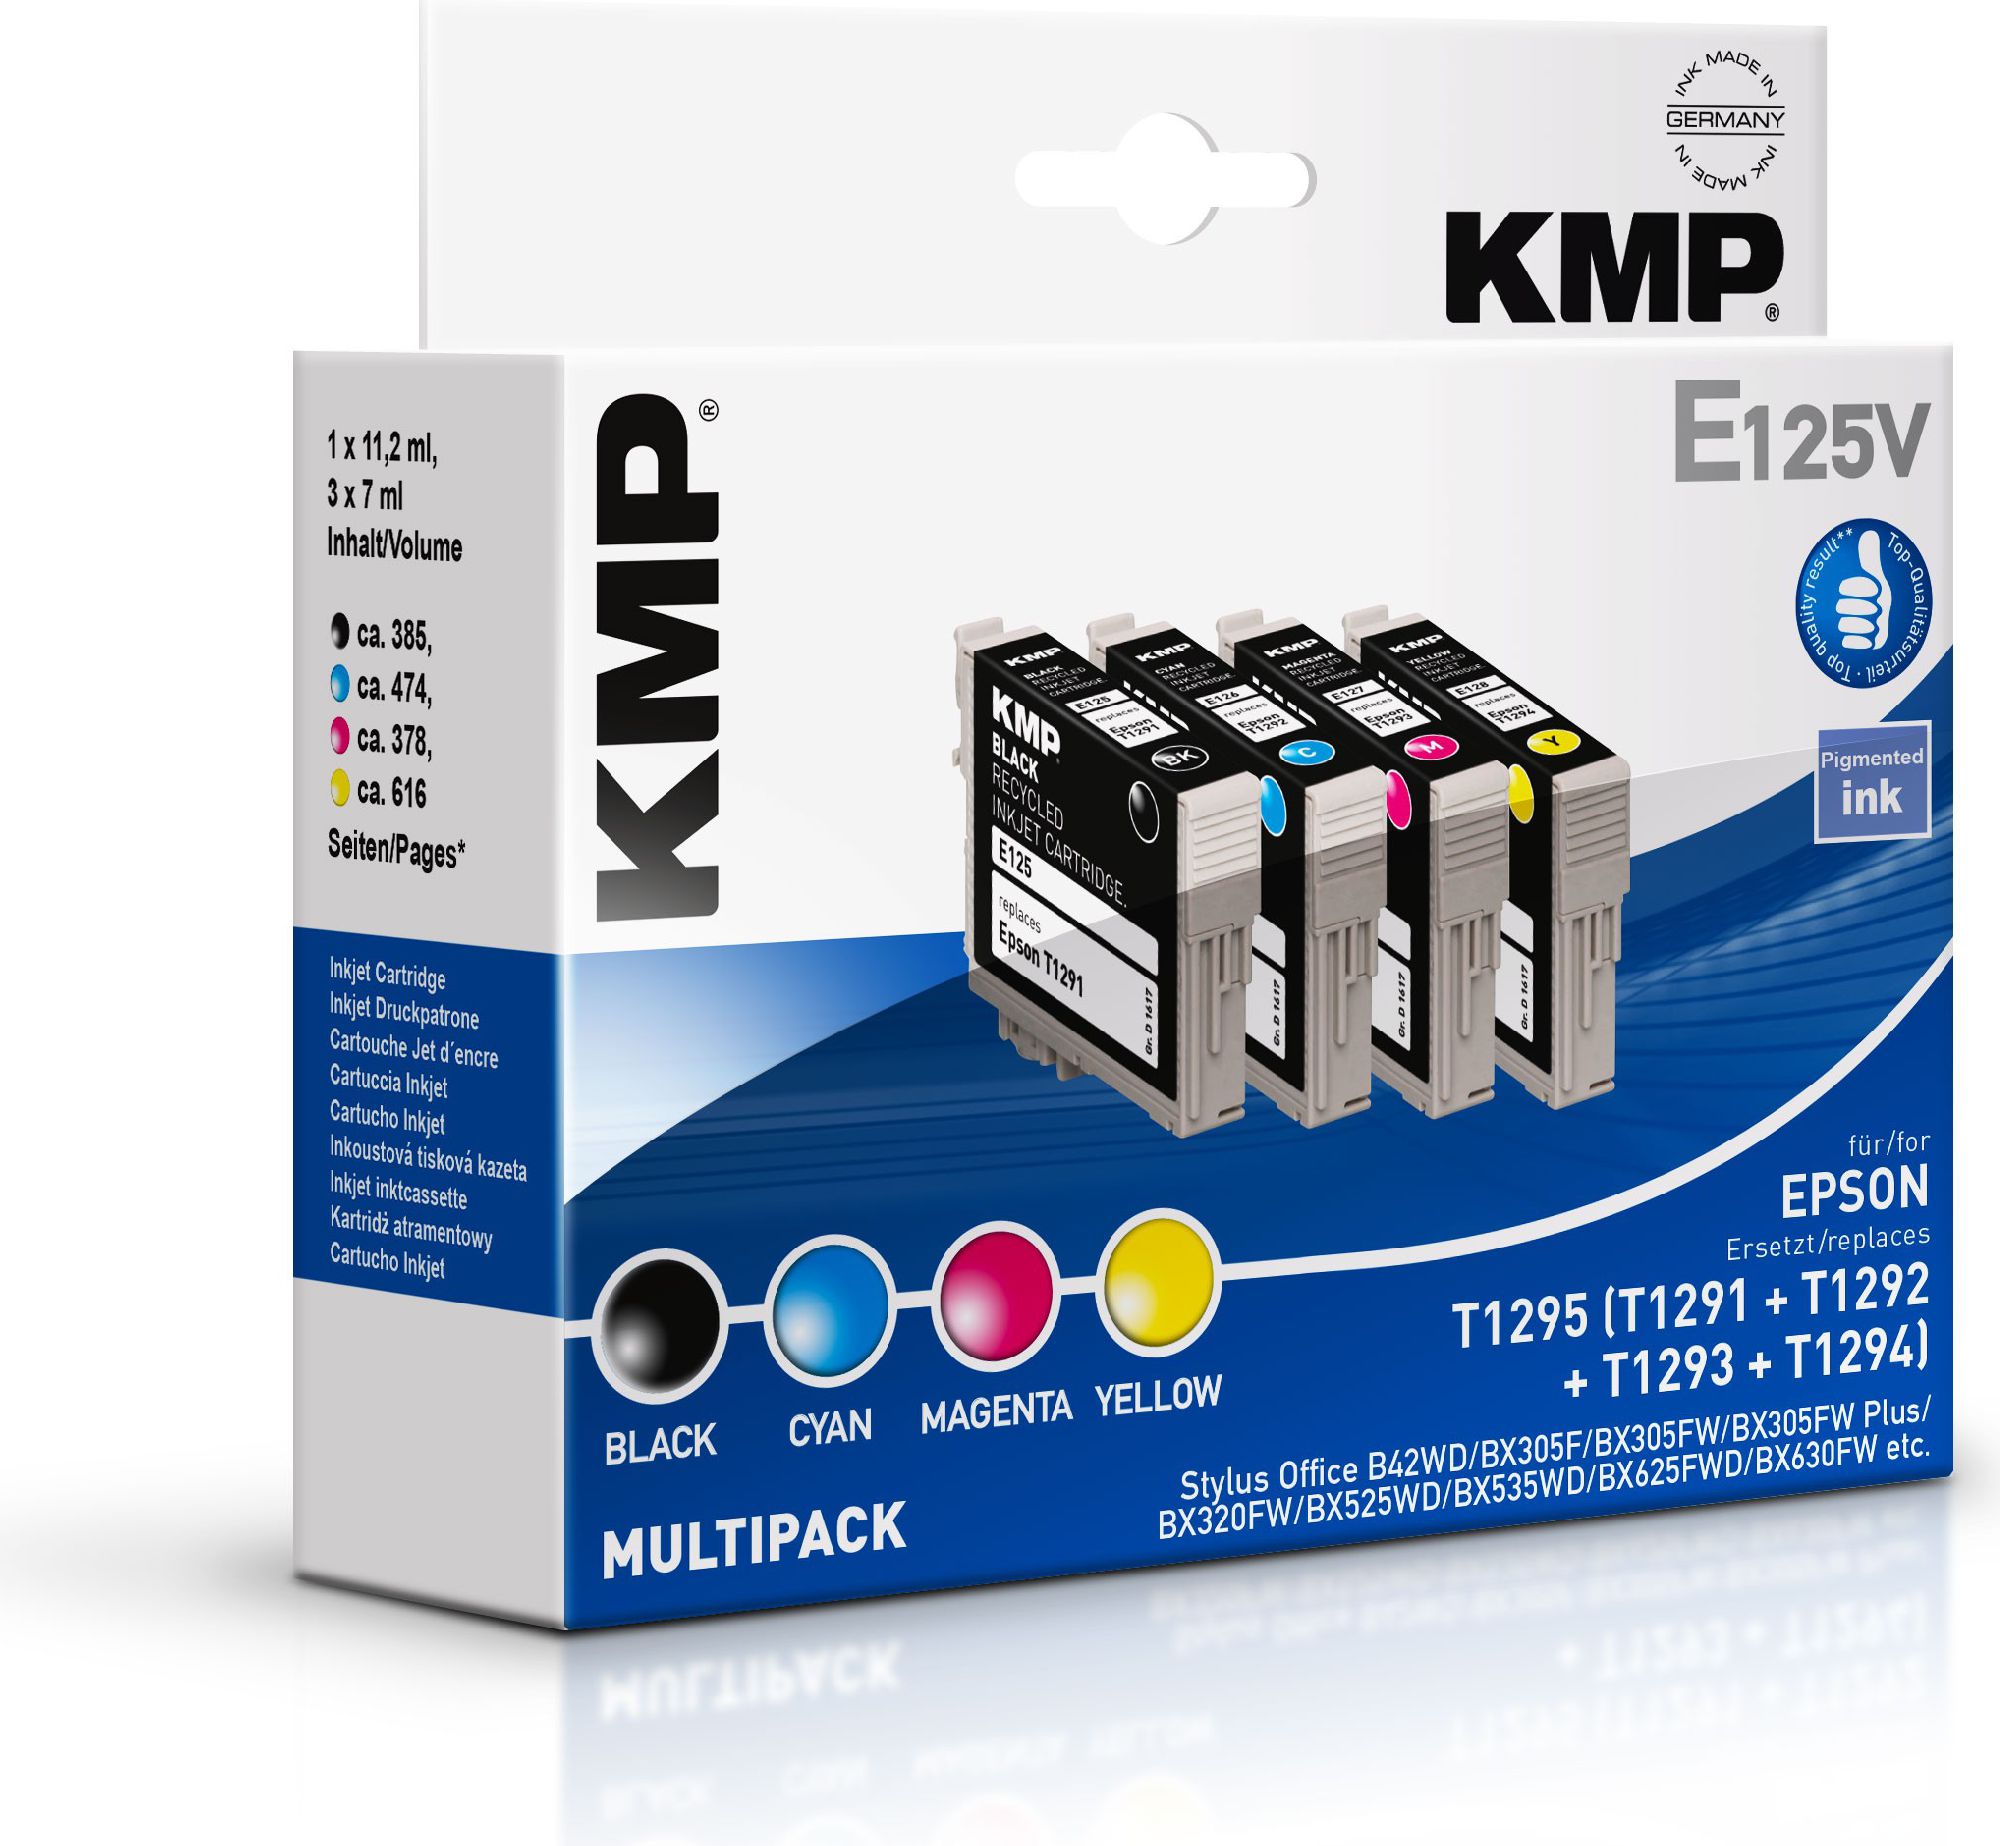 KMP E125V Multipack BK/C/M/Y compatible with Epson T 129